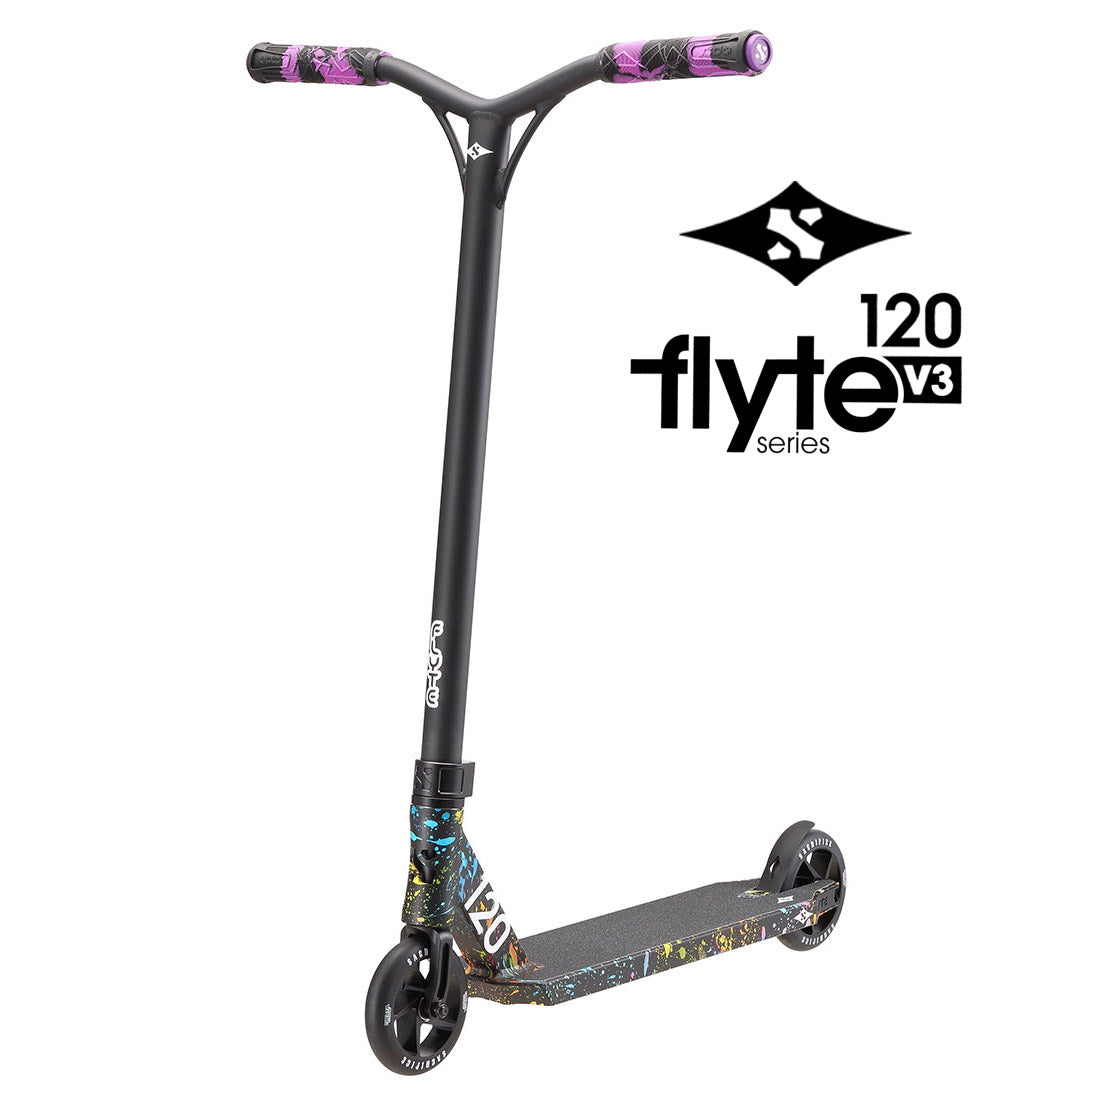 Sacrifice Flyte 120 V3 - Paint Splat Scooter Completes Trick